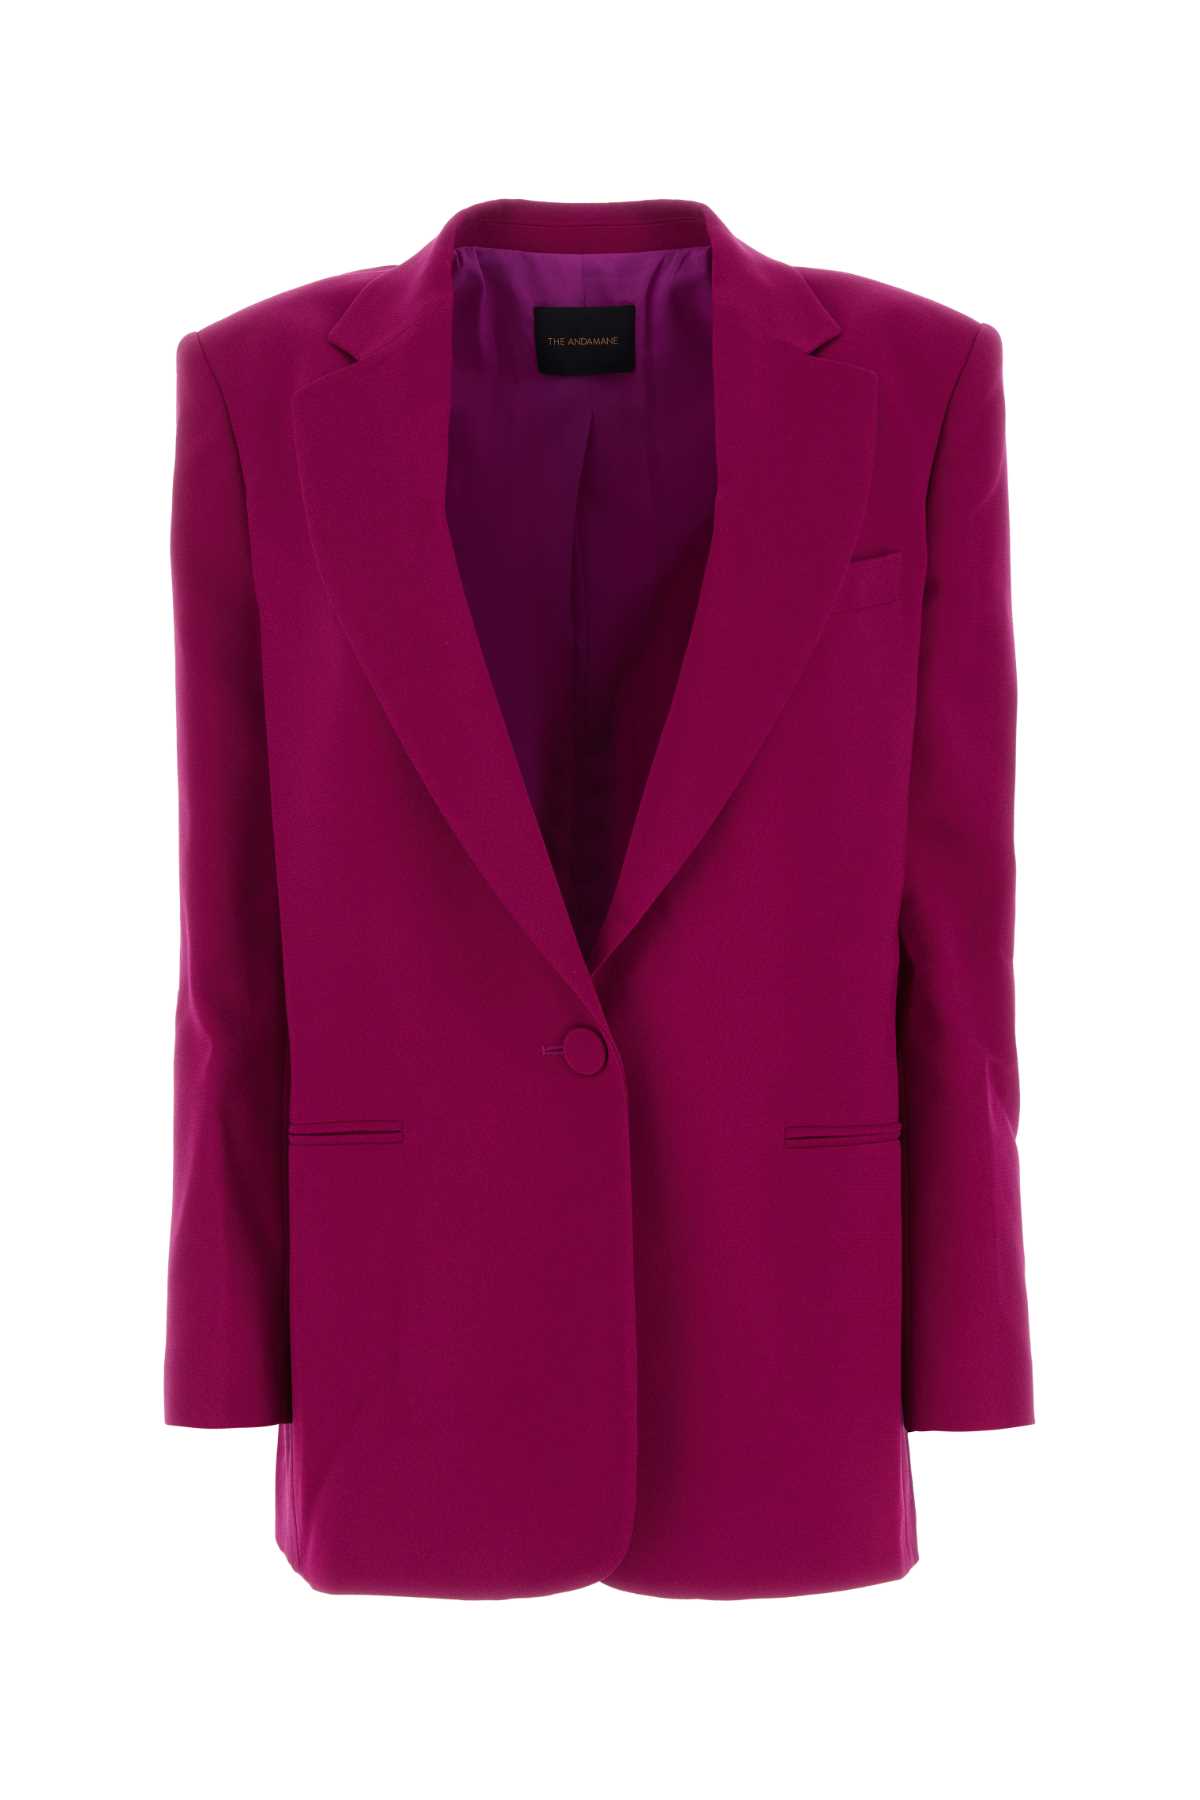 Tyrian Purple Polyester Blazer